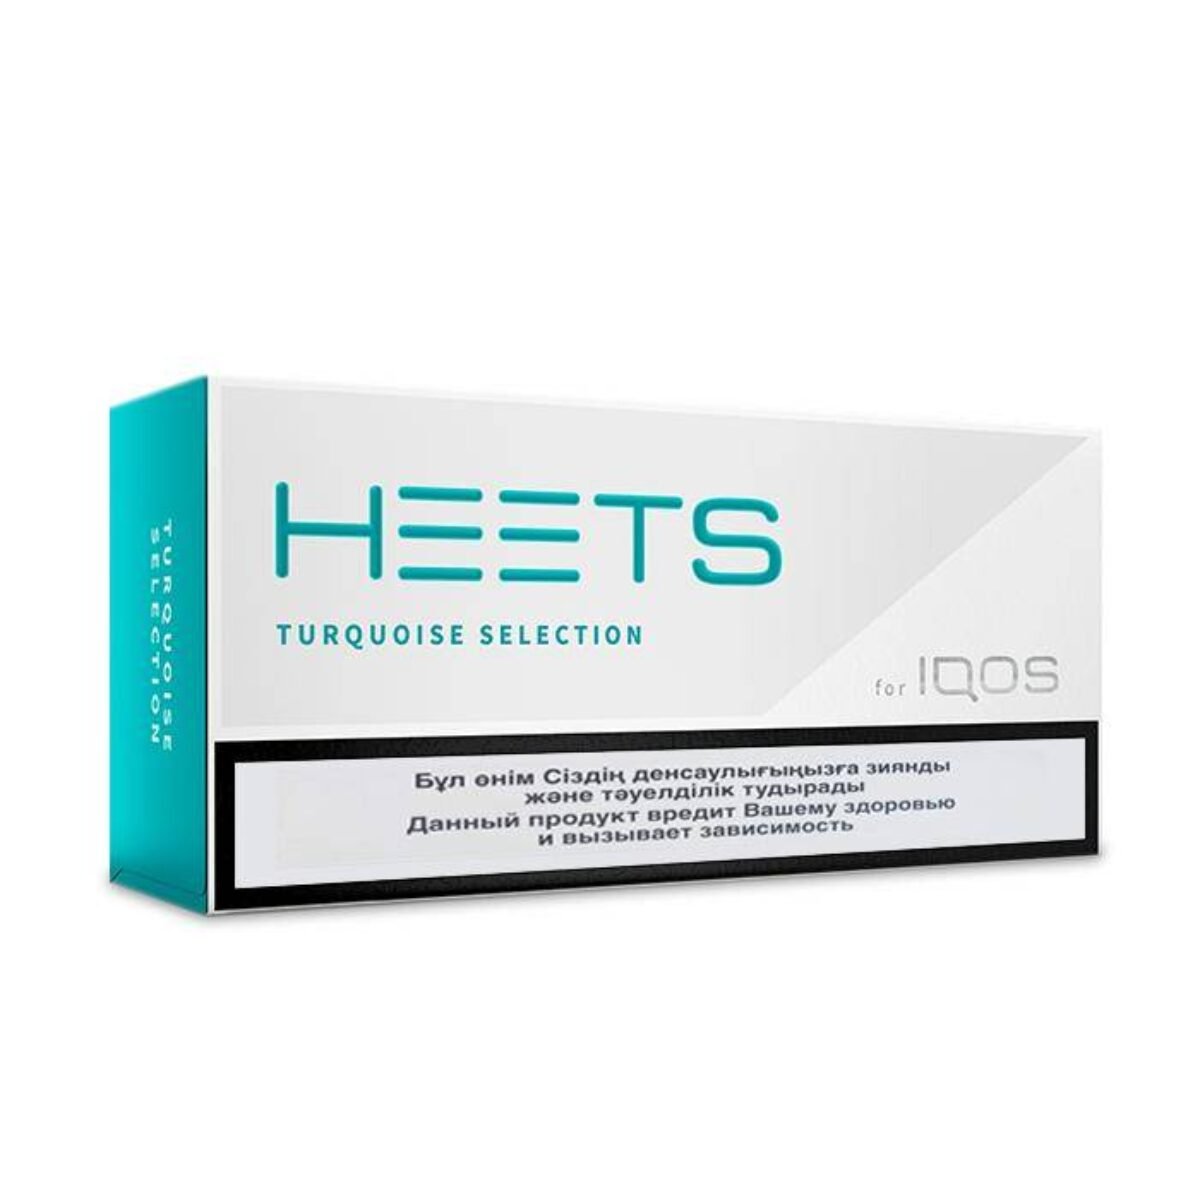 Buy Online IQOS Heets Bronze Selection - price 100 AED